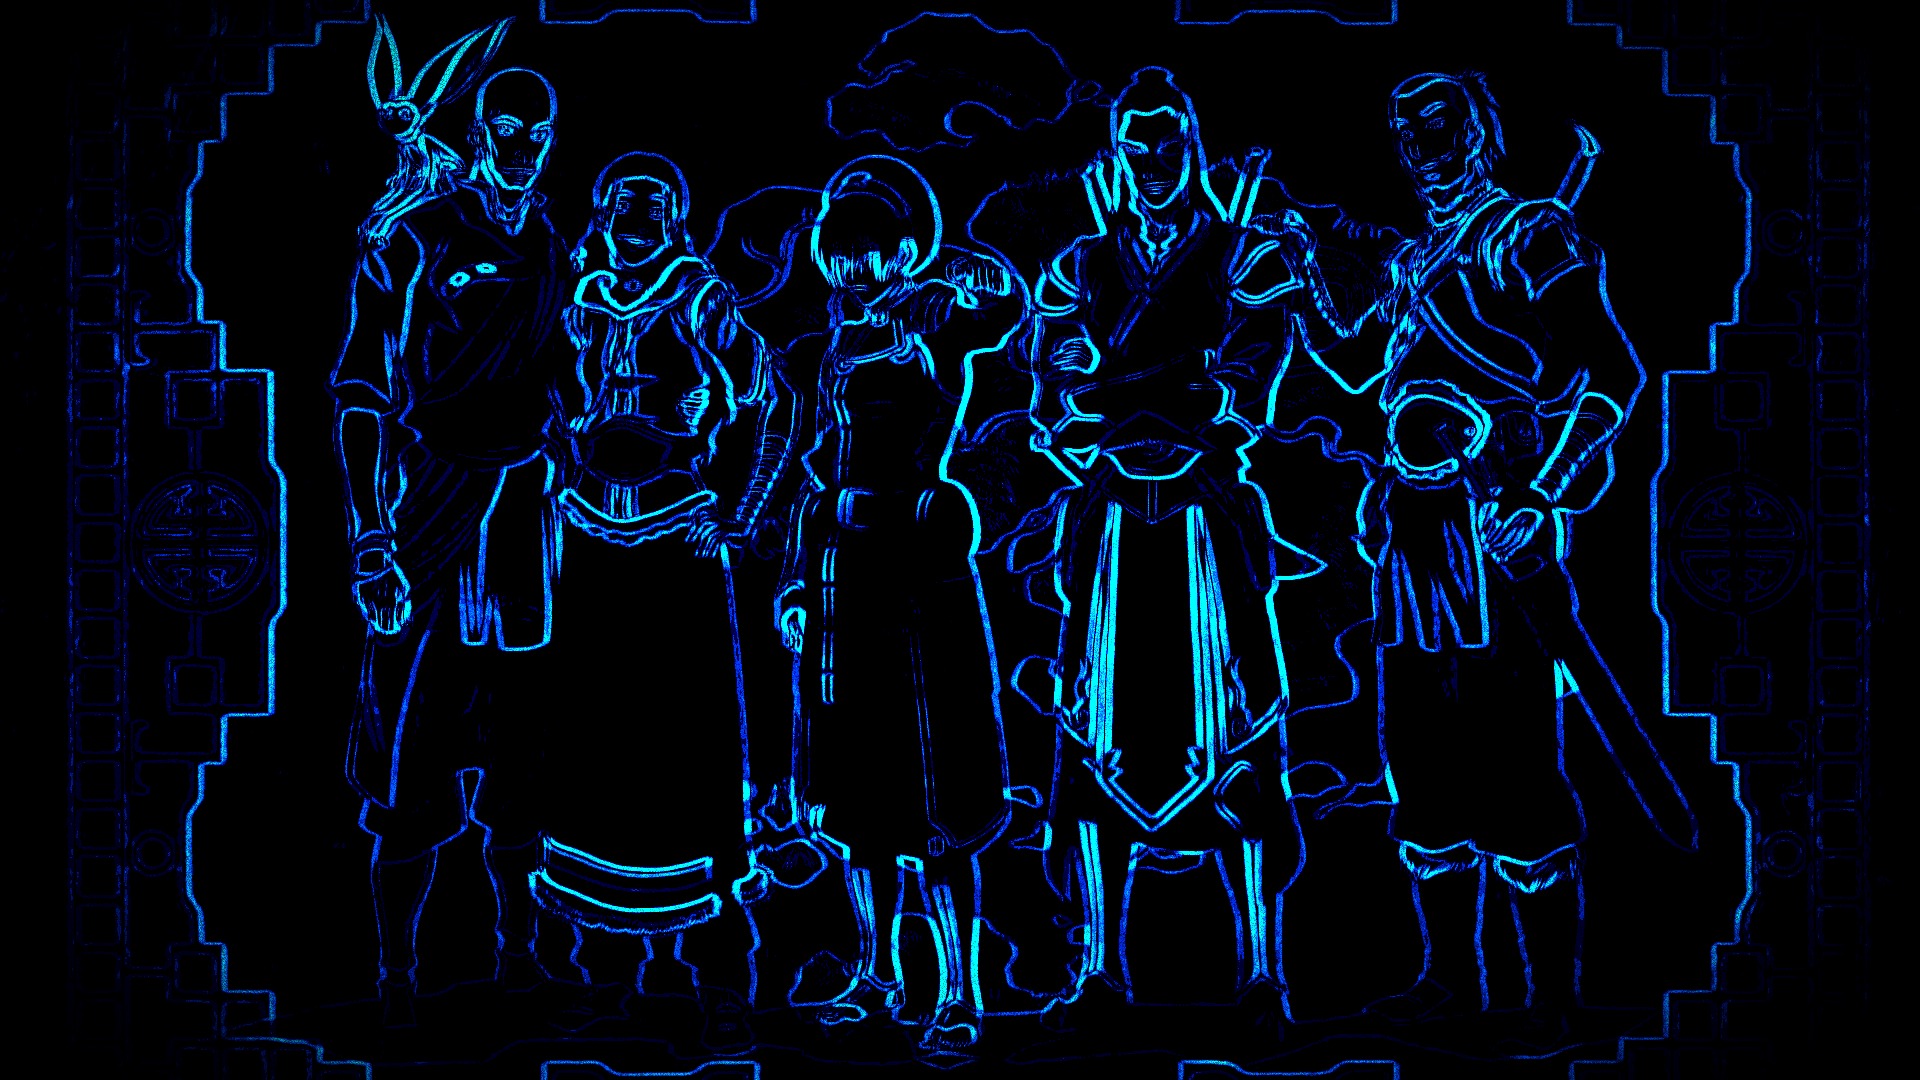 Anime 1920x1080 Avatar Avatar: The Last Airbender The Legend of Korra anime neon blue edge